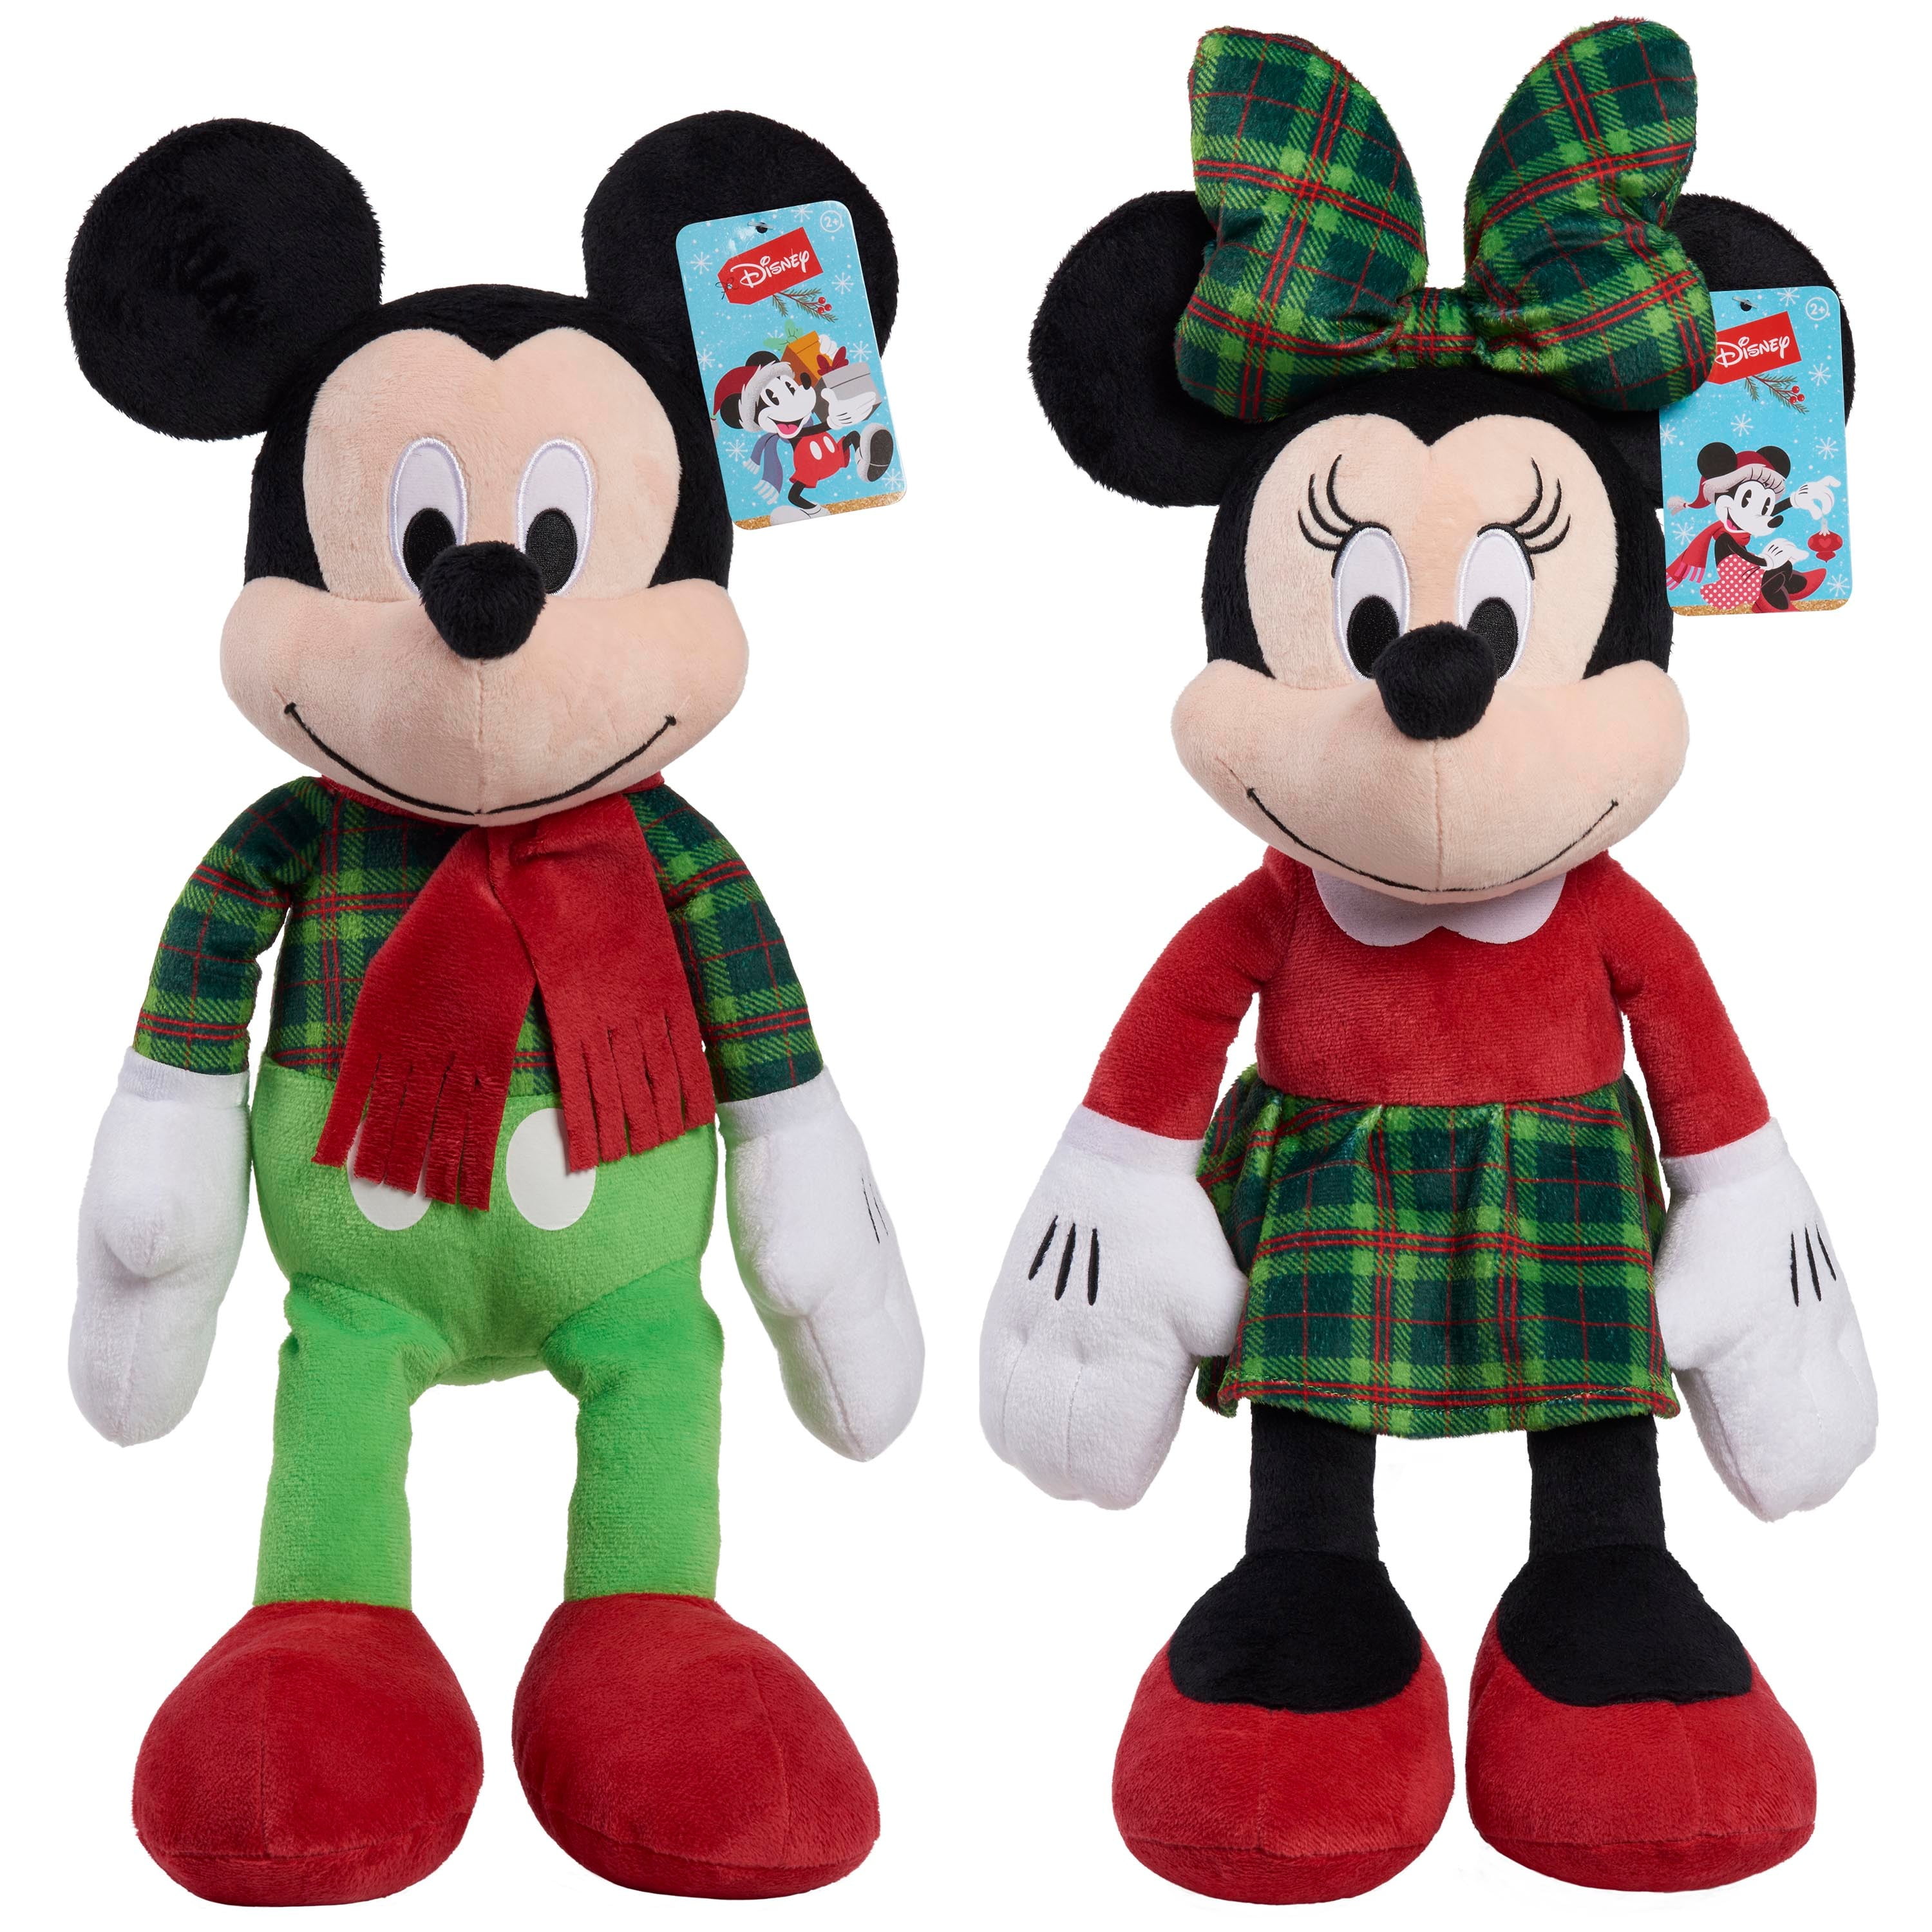 Disney Holiday Classics Mickey Mouse 19-inch Large Plushie Stuffed